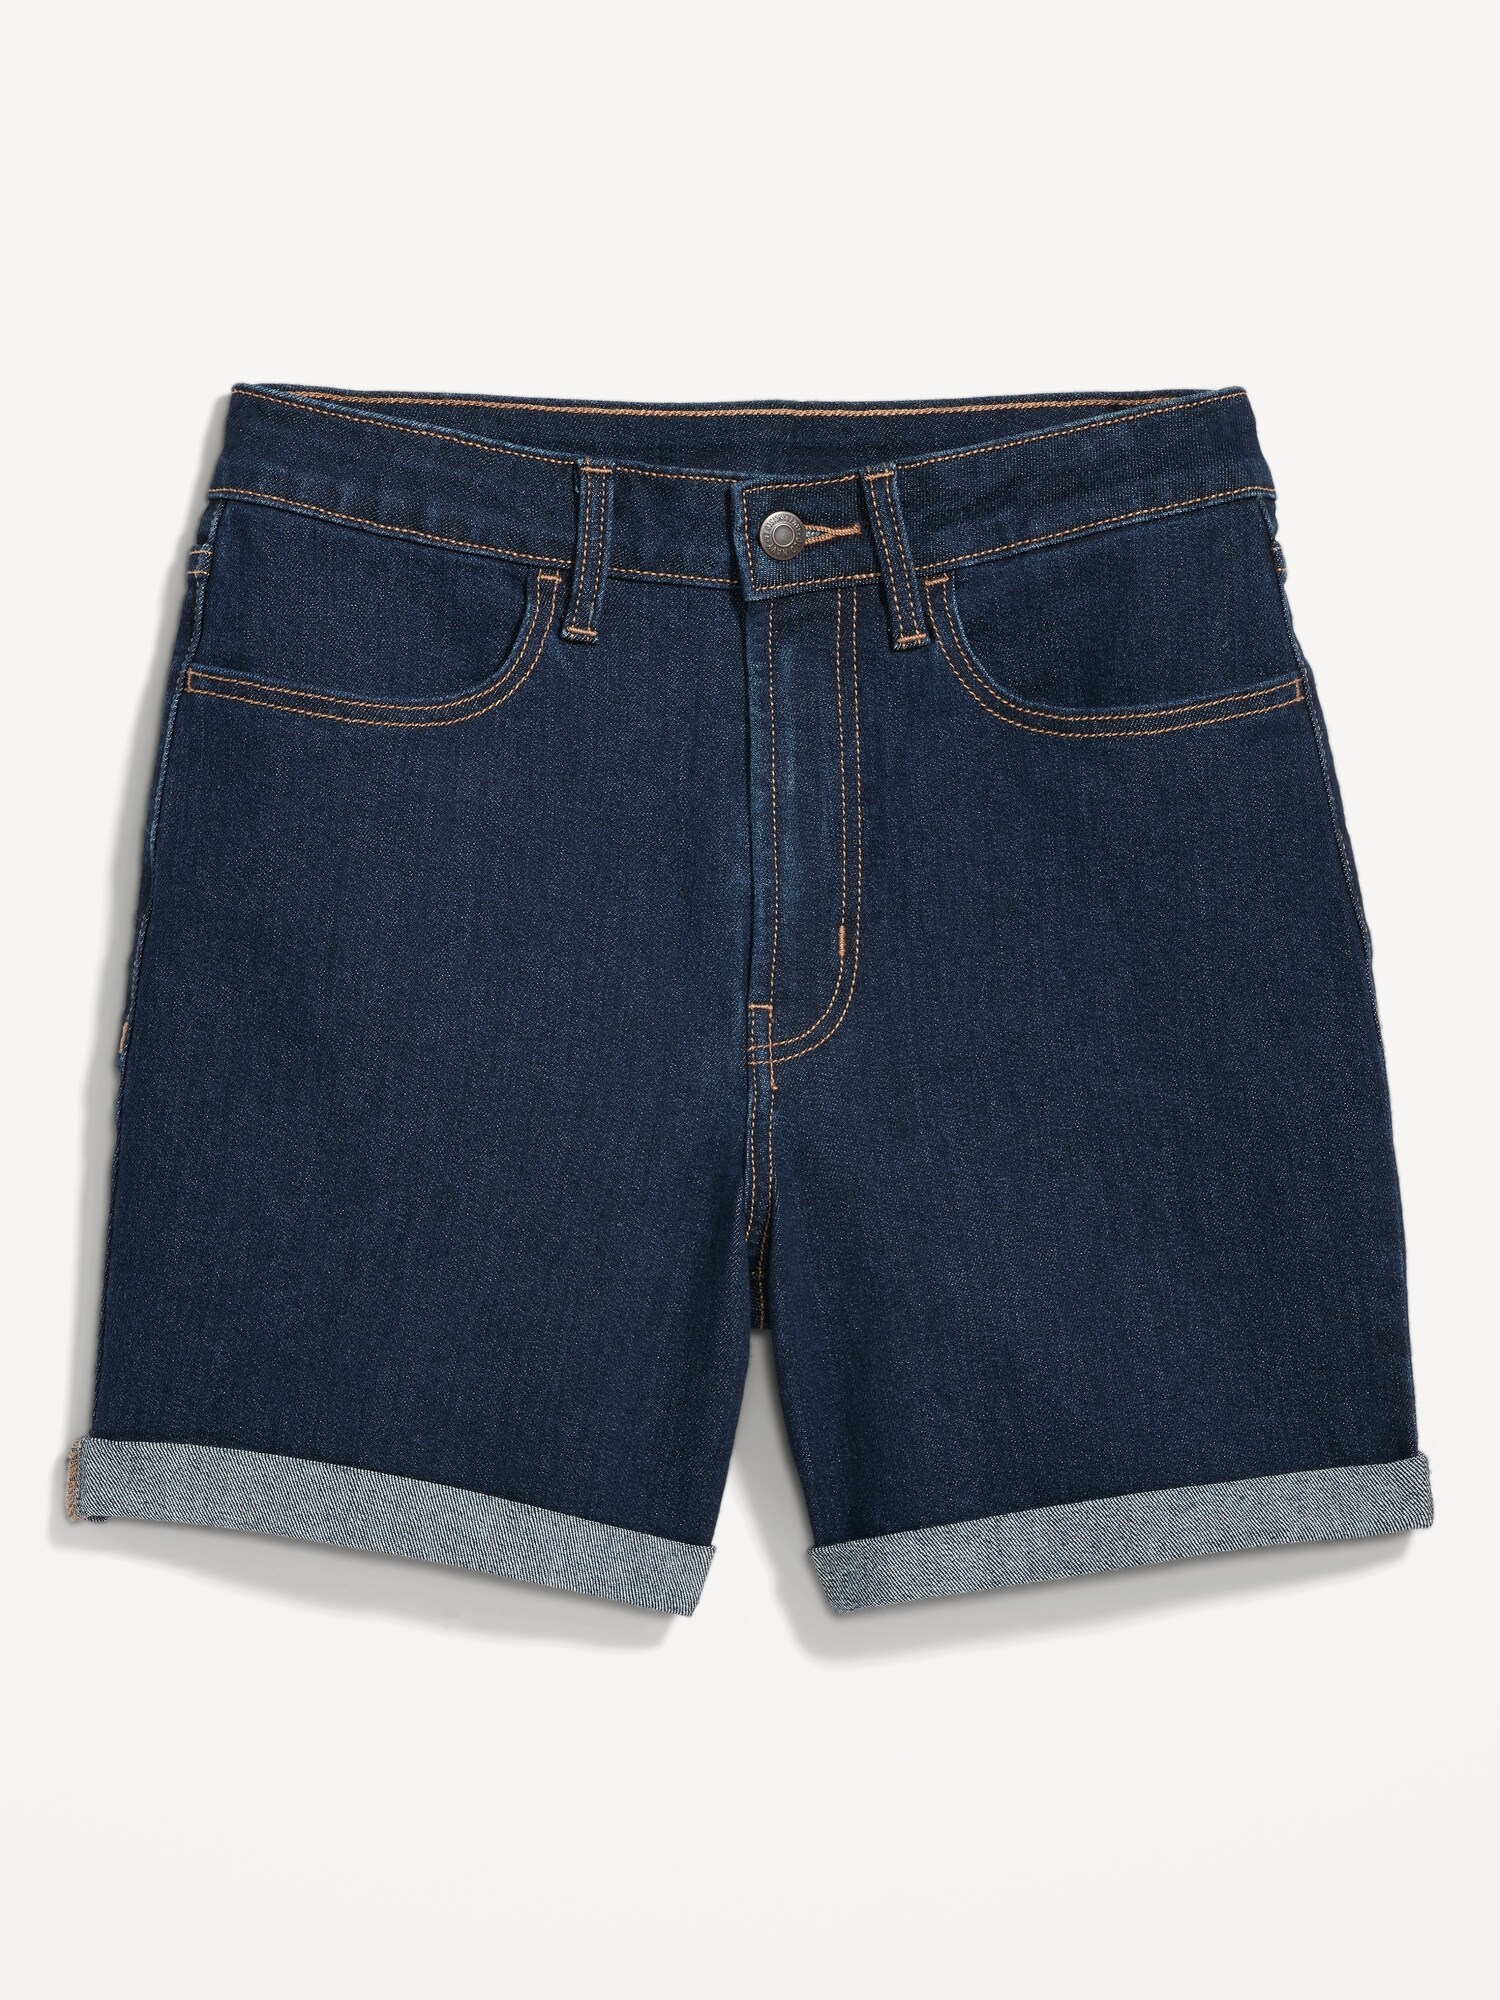 High-Waisted O.G. Straight Jean Shorts -- 5-inch inseam